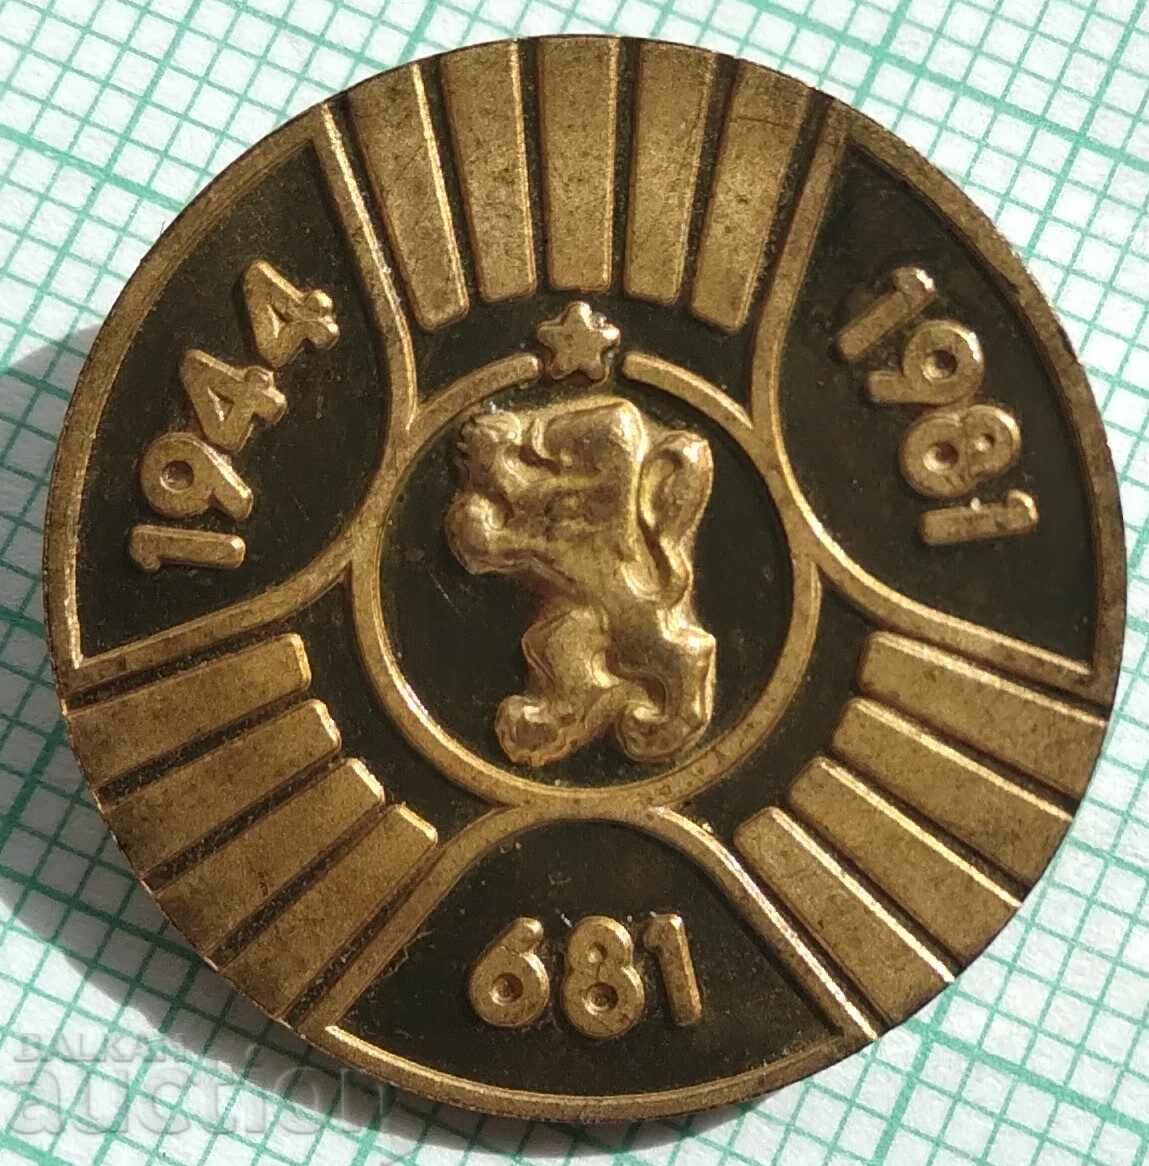 15494 Badge - 1300 years Bulgaria 681-1981.